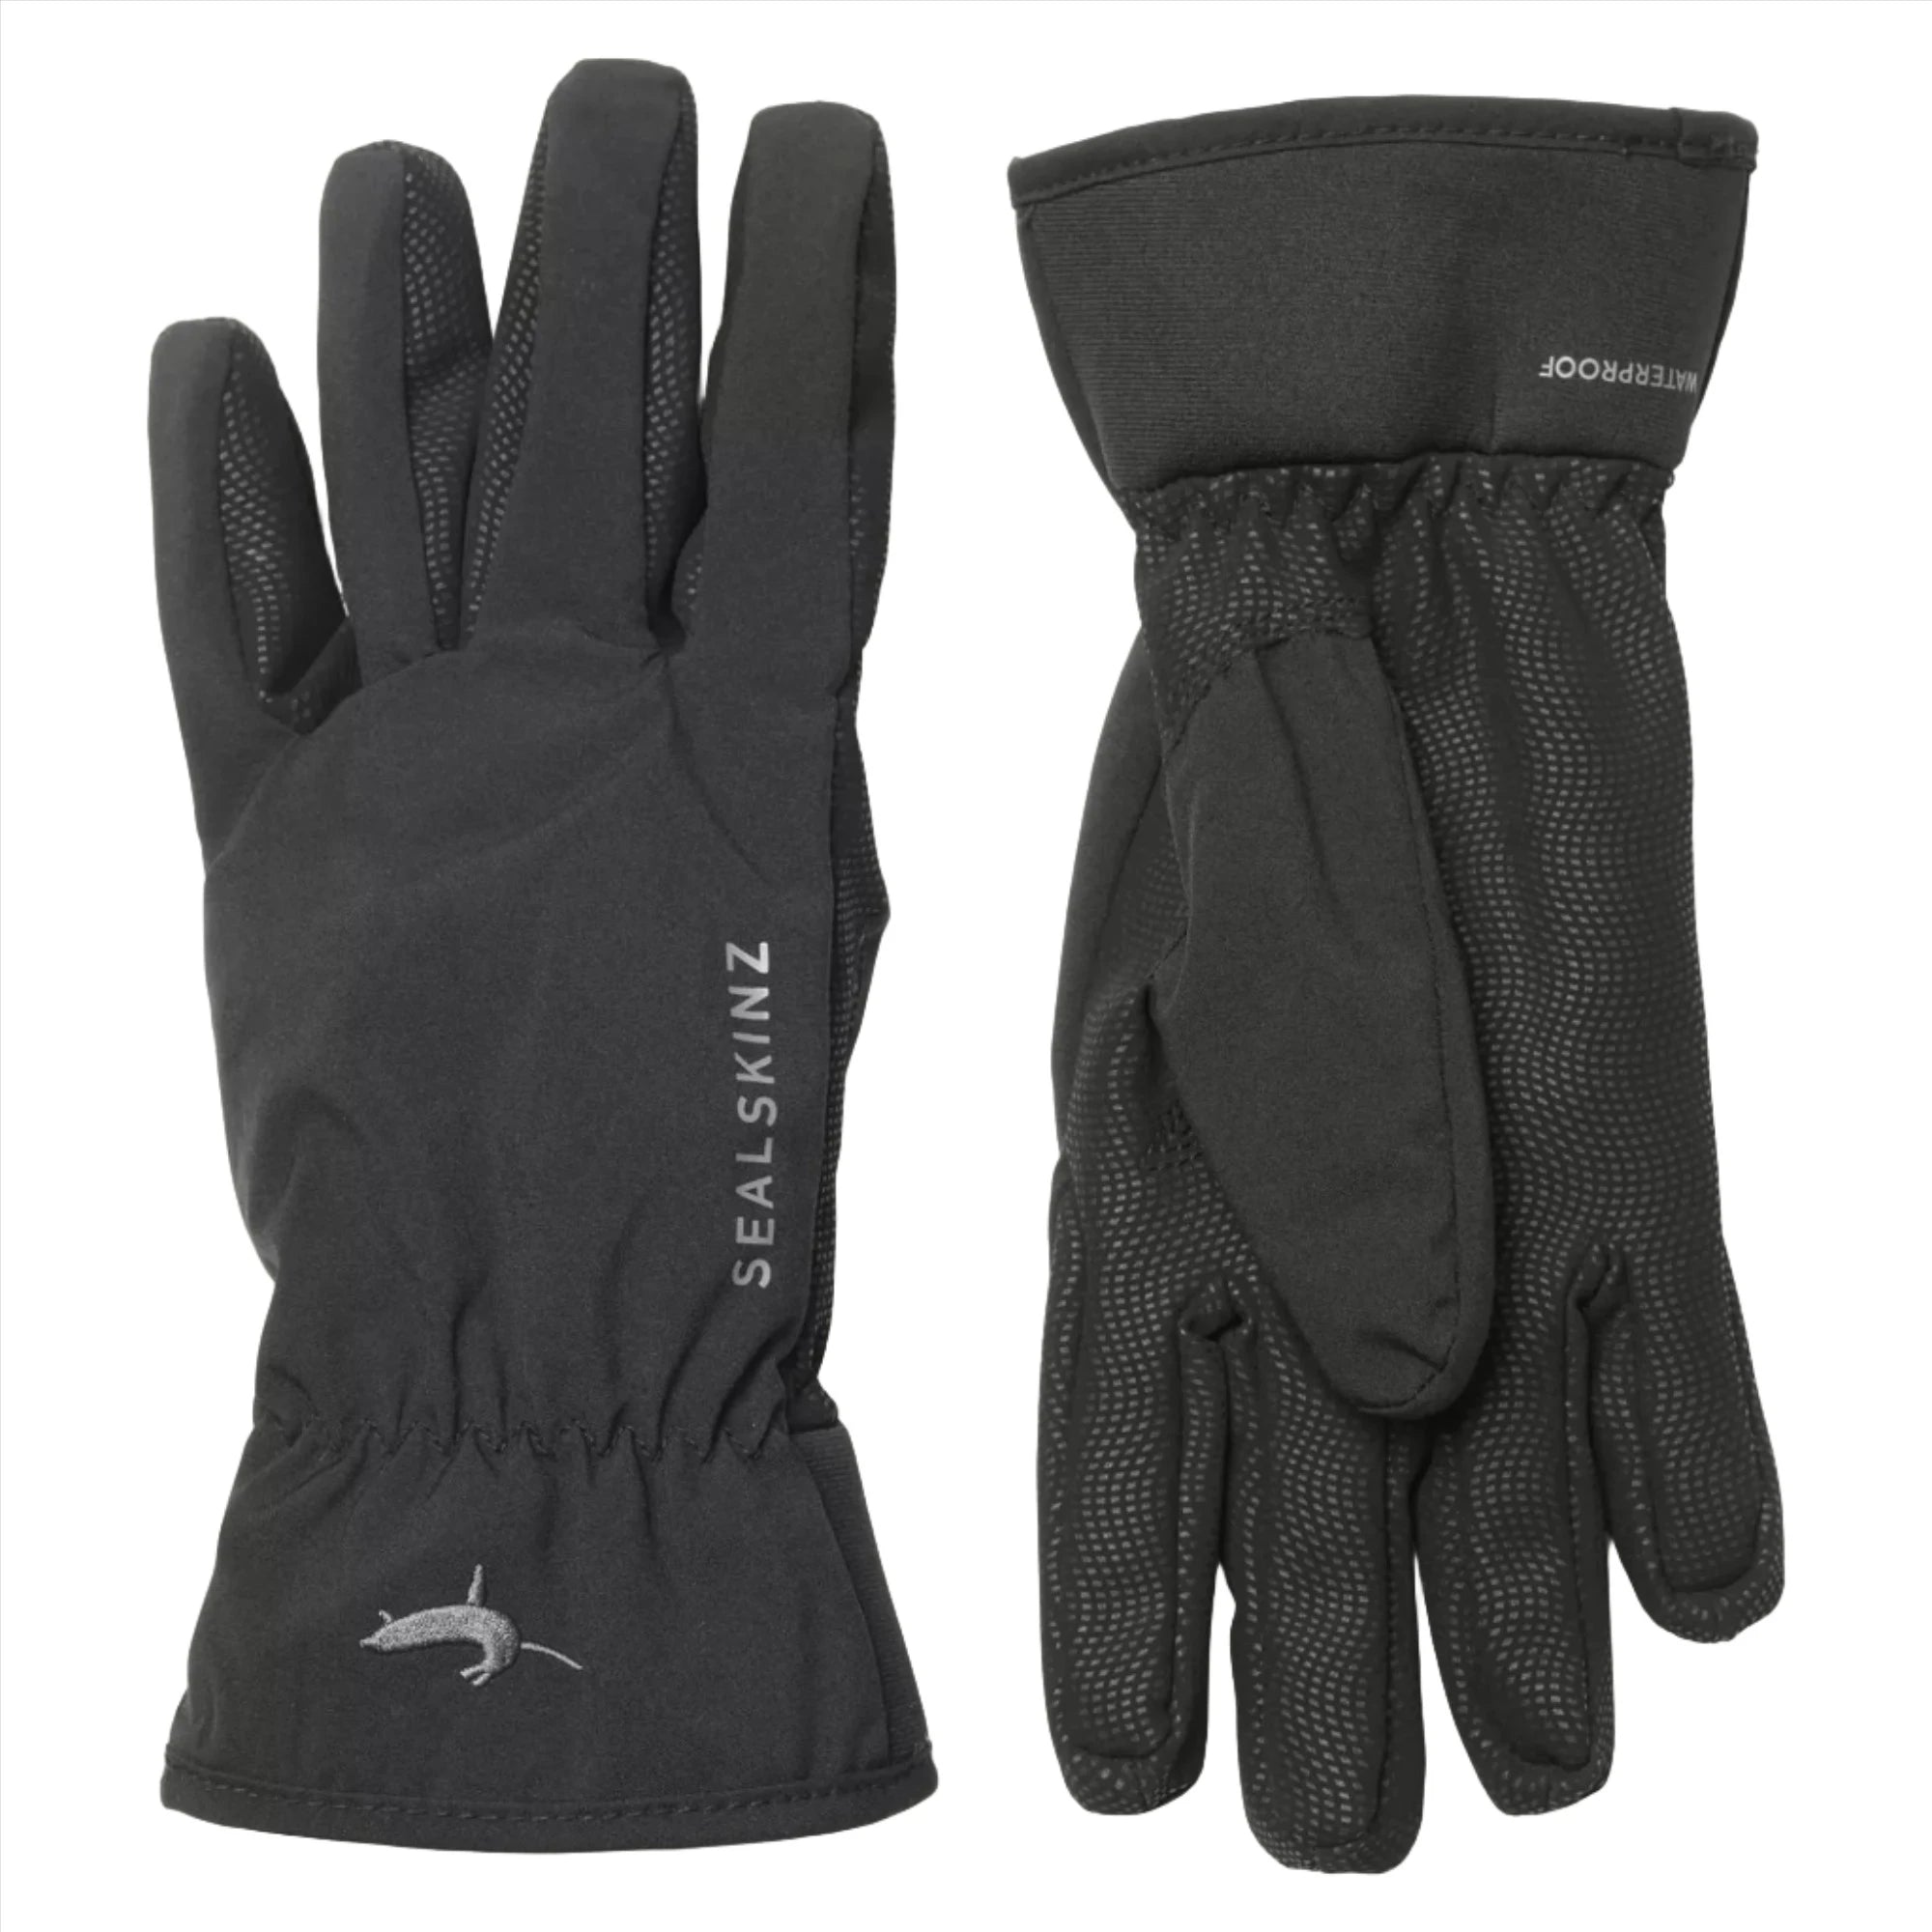 Griston Aquasealz Waterproof All Weather Lightweight Gloves - Black